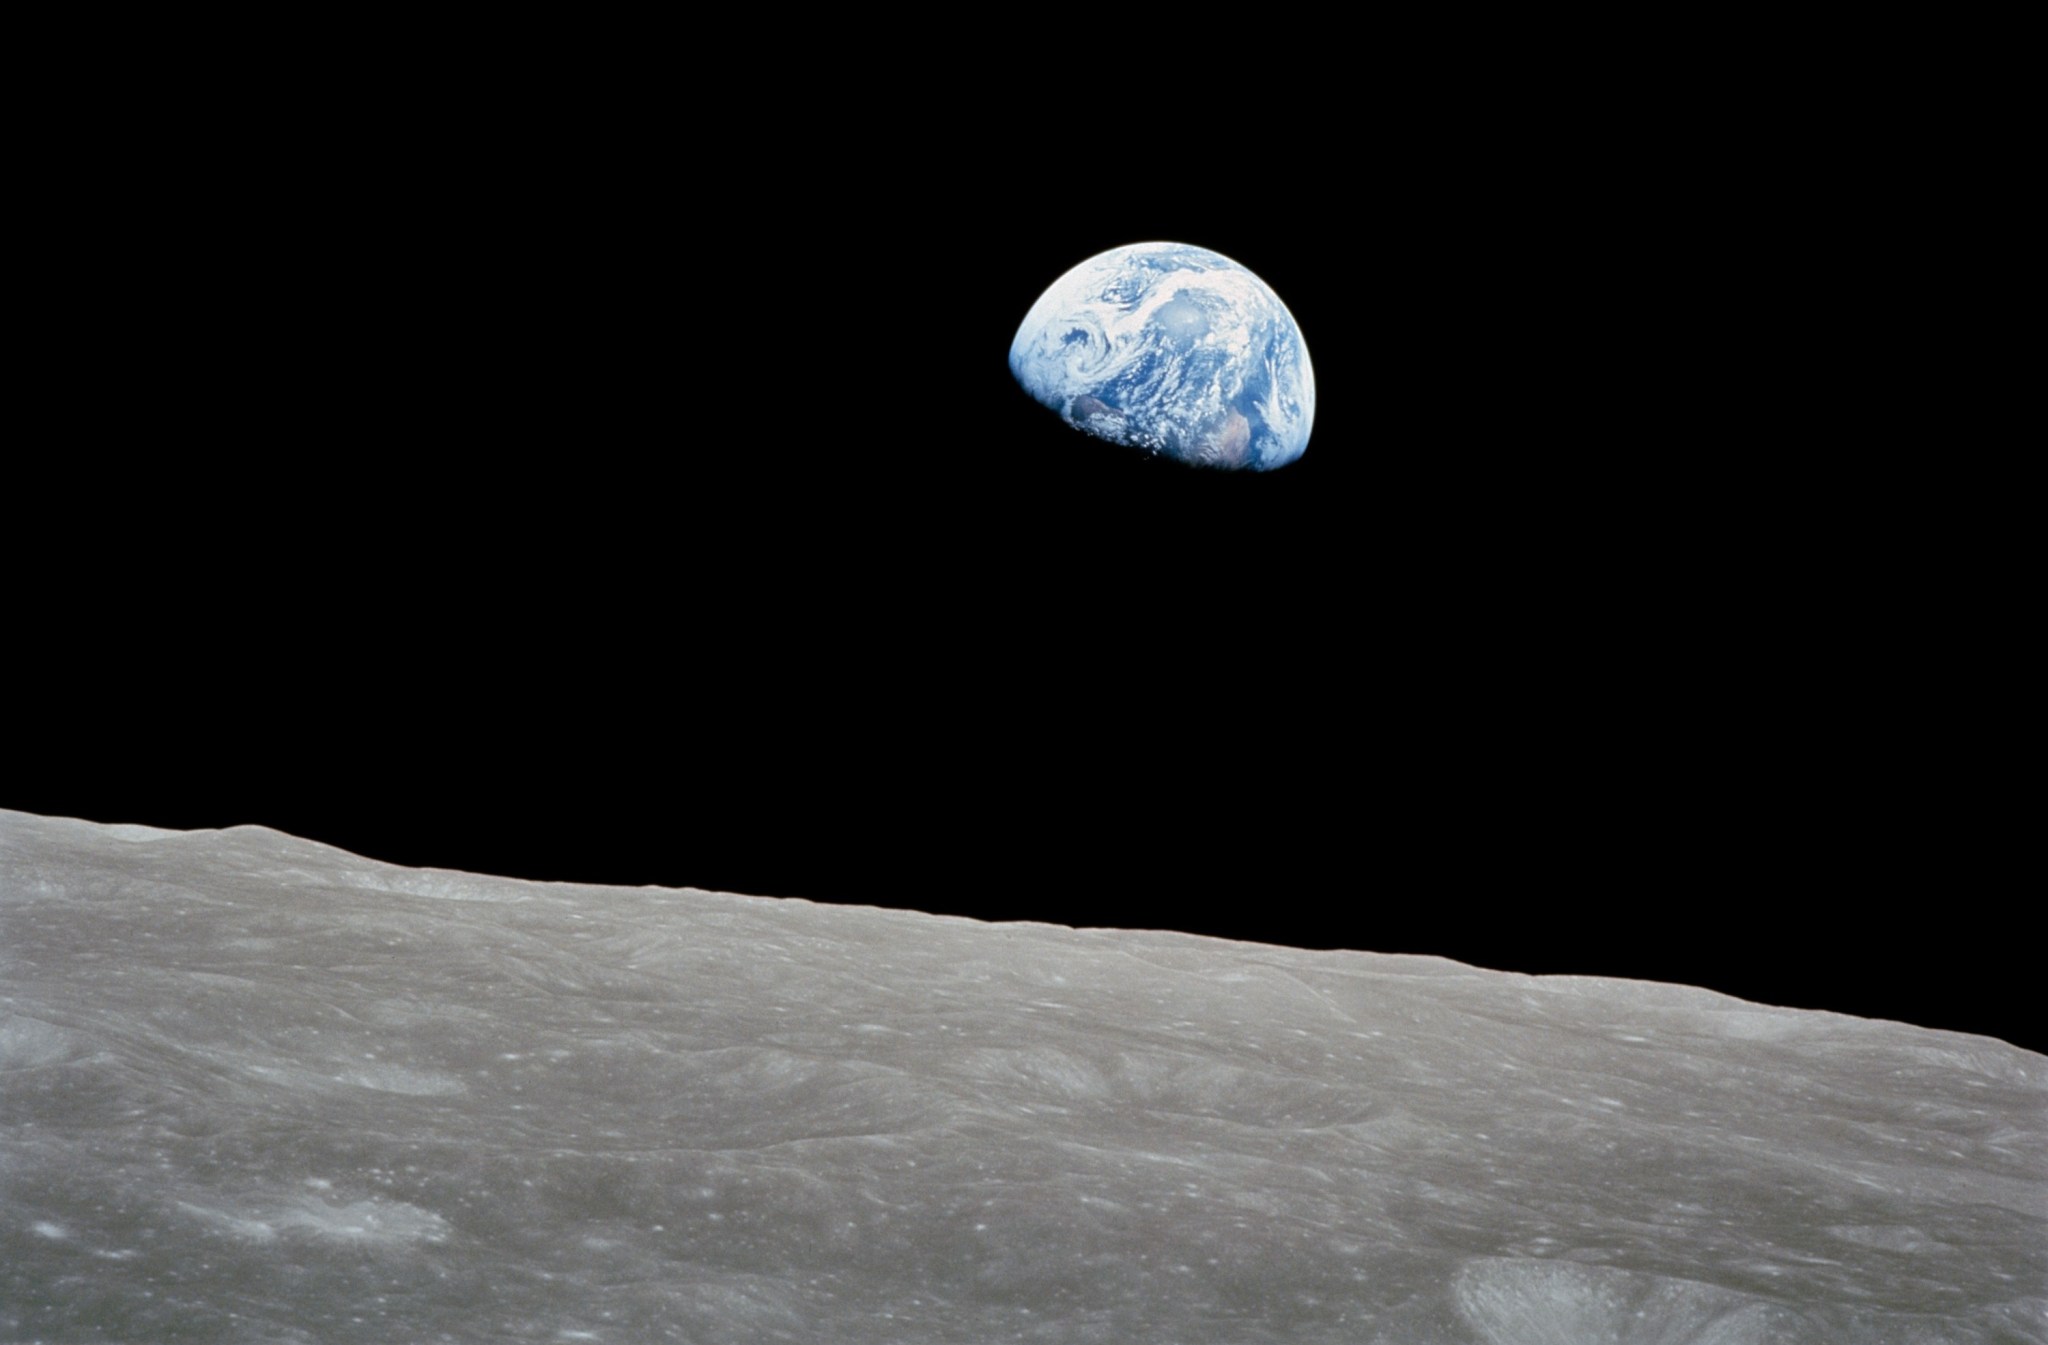 The Earthrise photo taken by the Apollo 8 astronauts